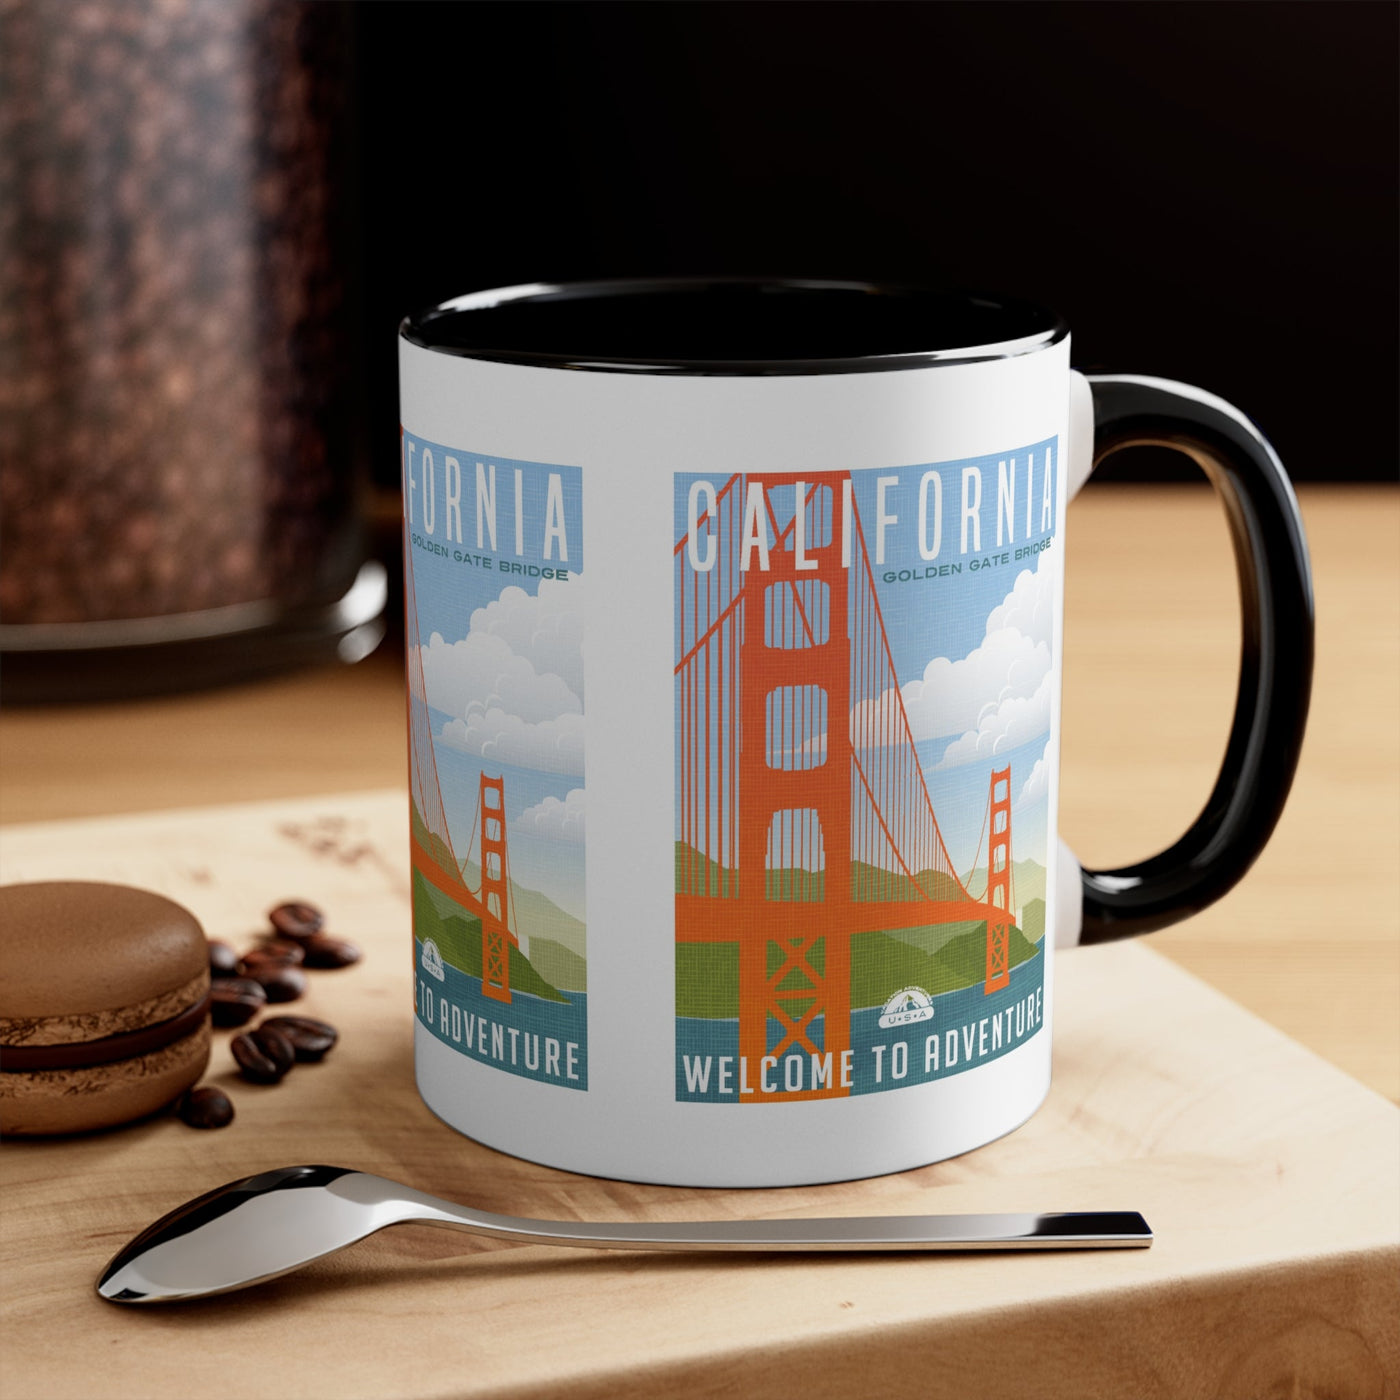 California Coffee Mug - Ezra's Clothing